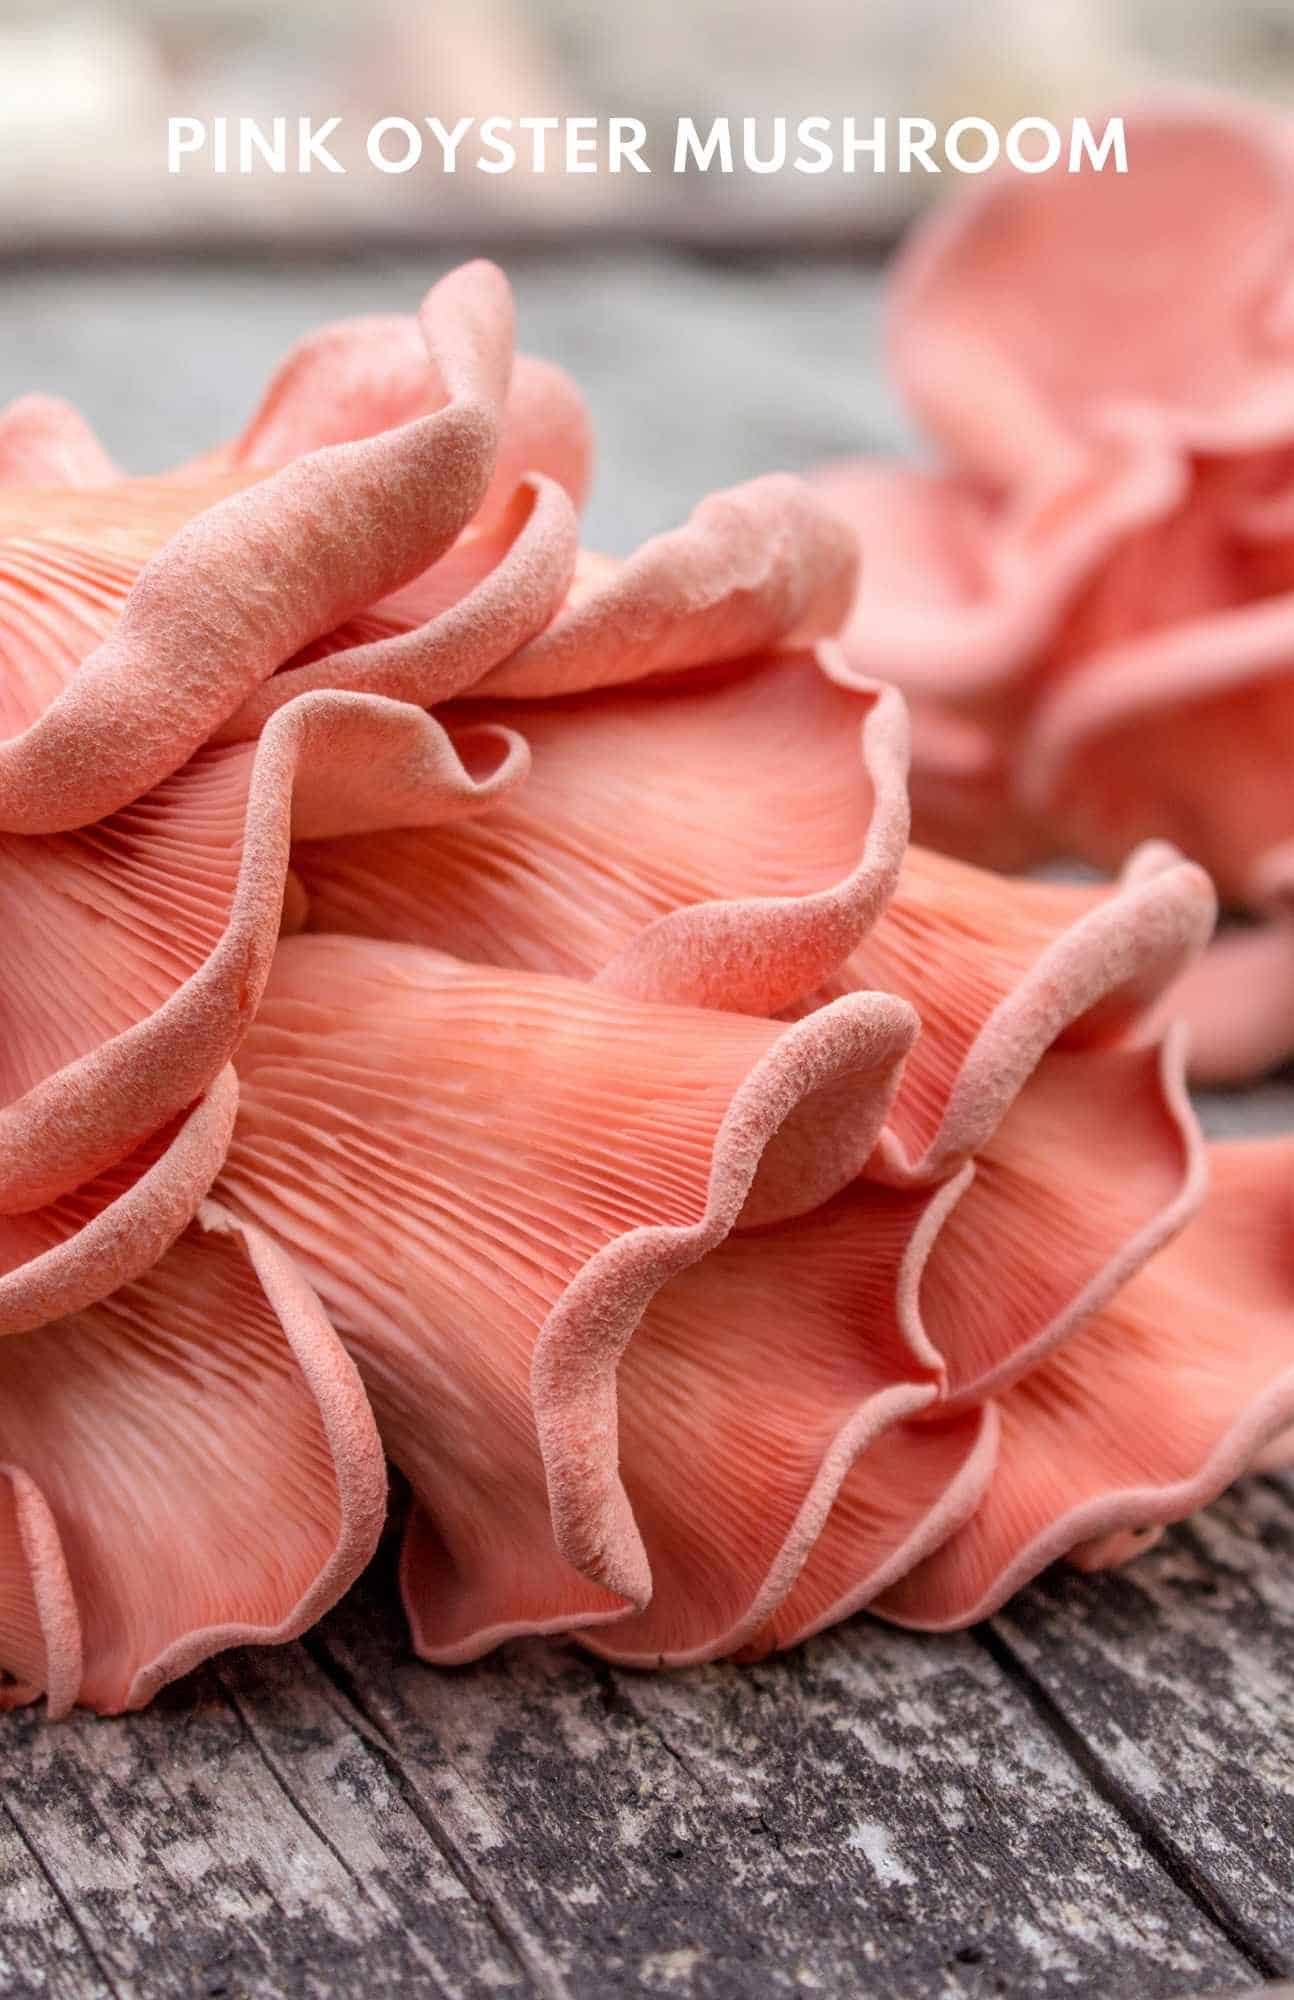 Pink oyster mushroom up close.